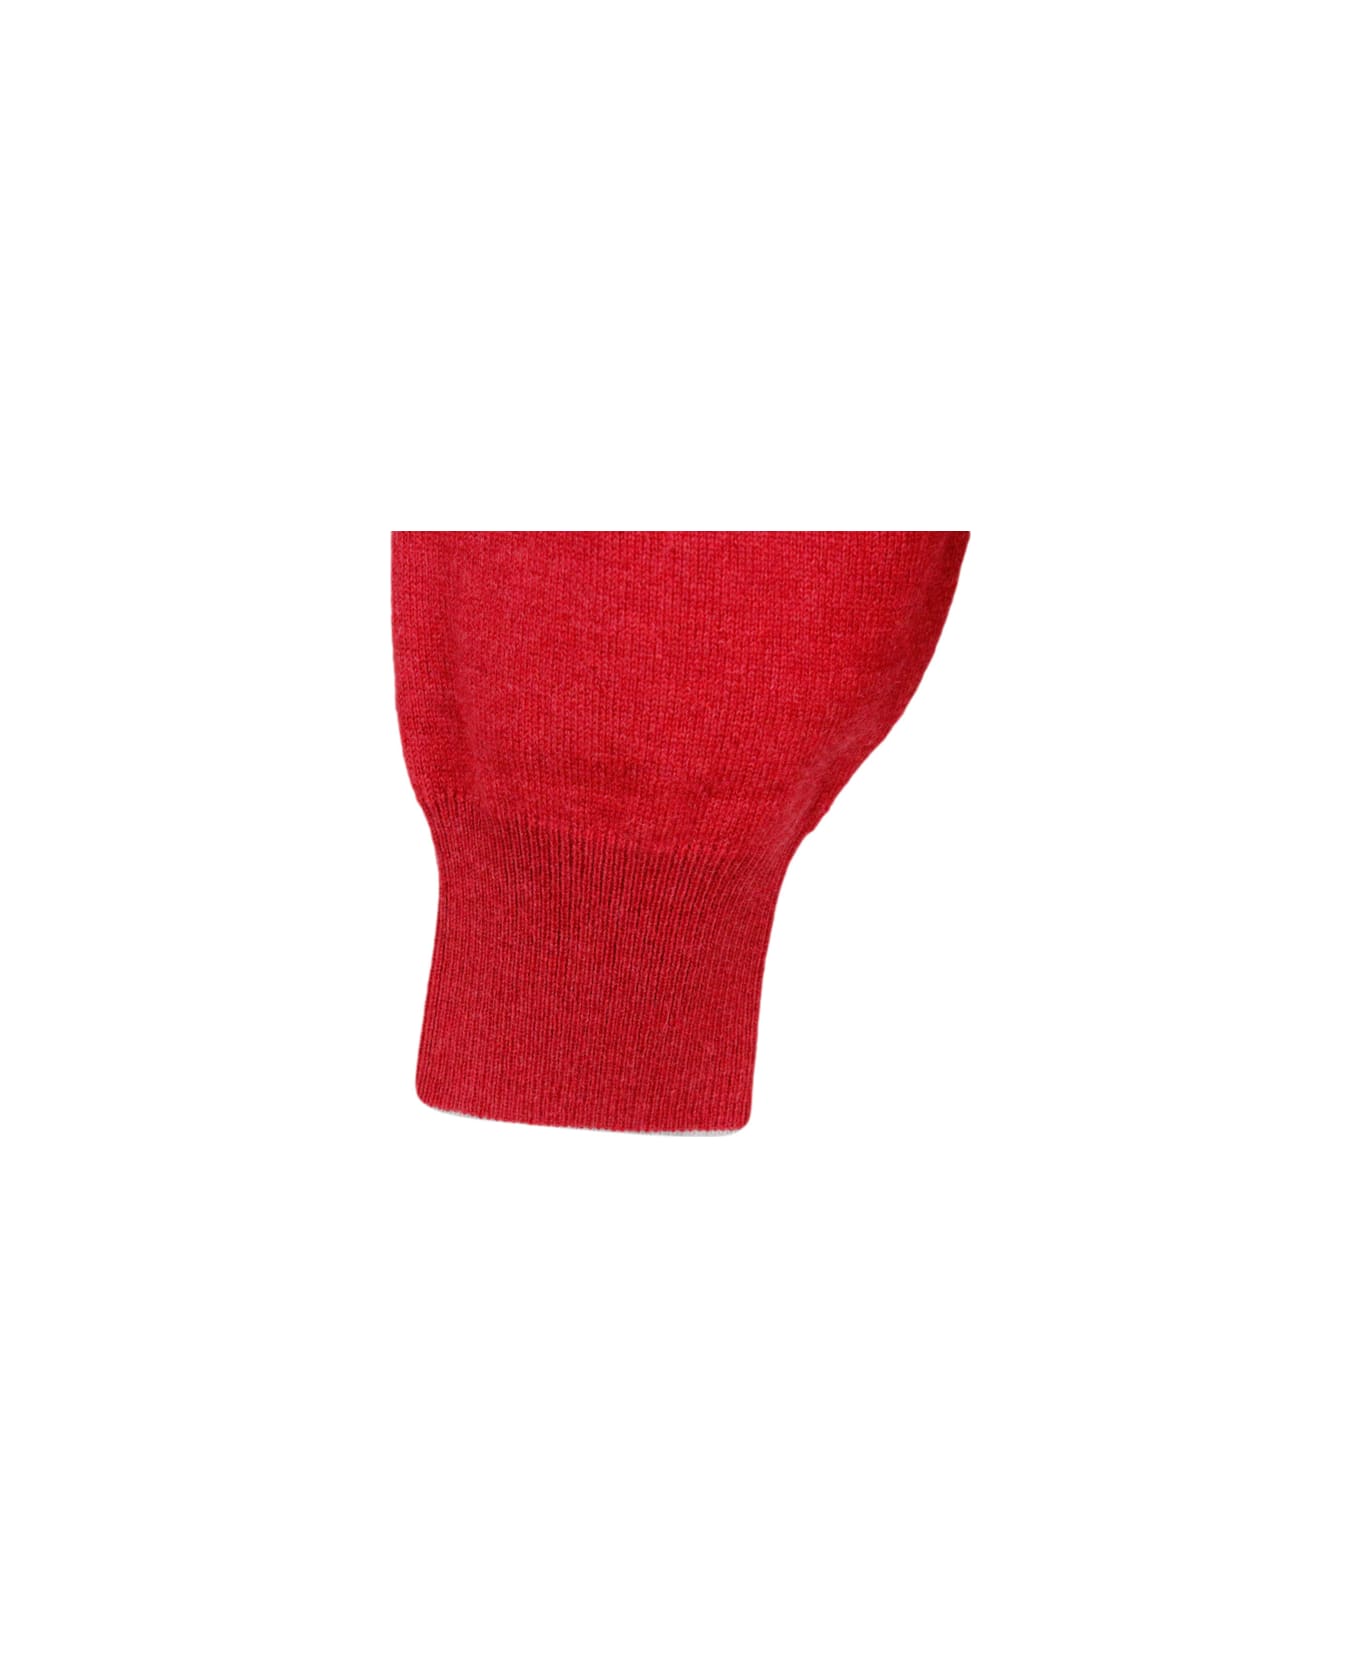 Brunello Cucinelli Long-sleeved Crew-neck Sweater - Red Magenta ニットウェア